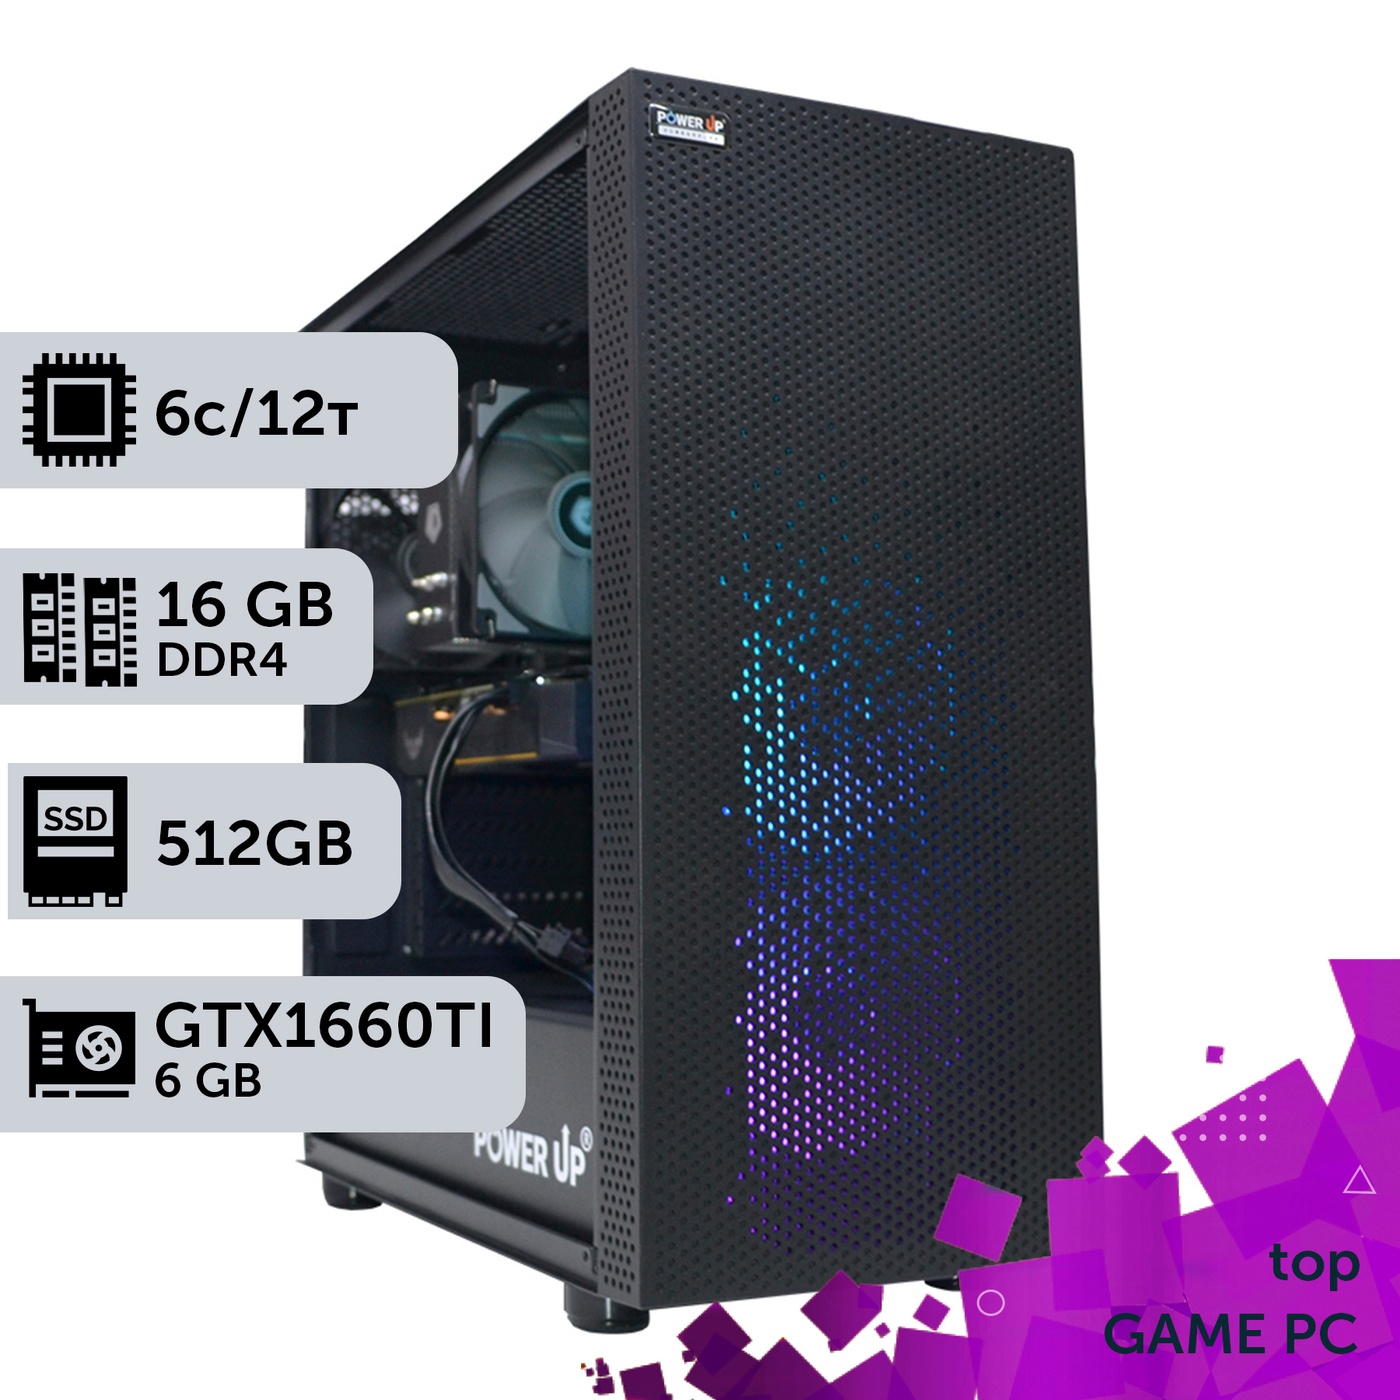 Игровой компьютер GamePC TOP #131 Core i5 10400F/16 GB/SSD 512GB/GeForce GTX 1660Ti 6GB